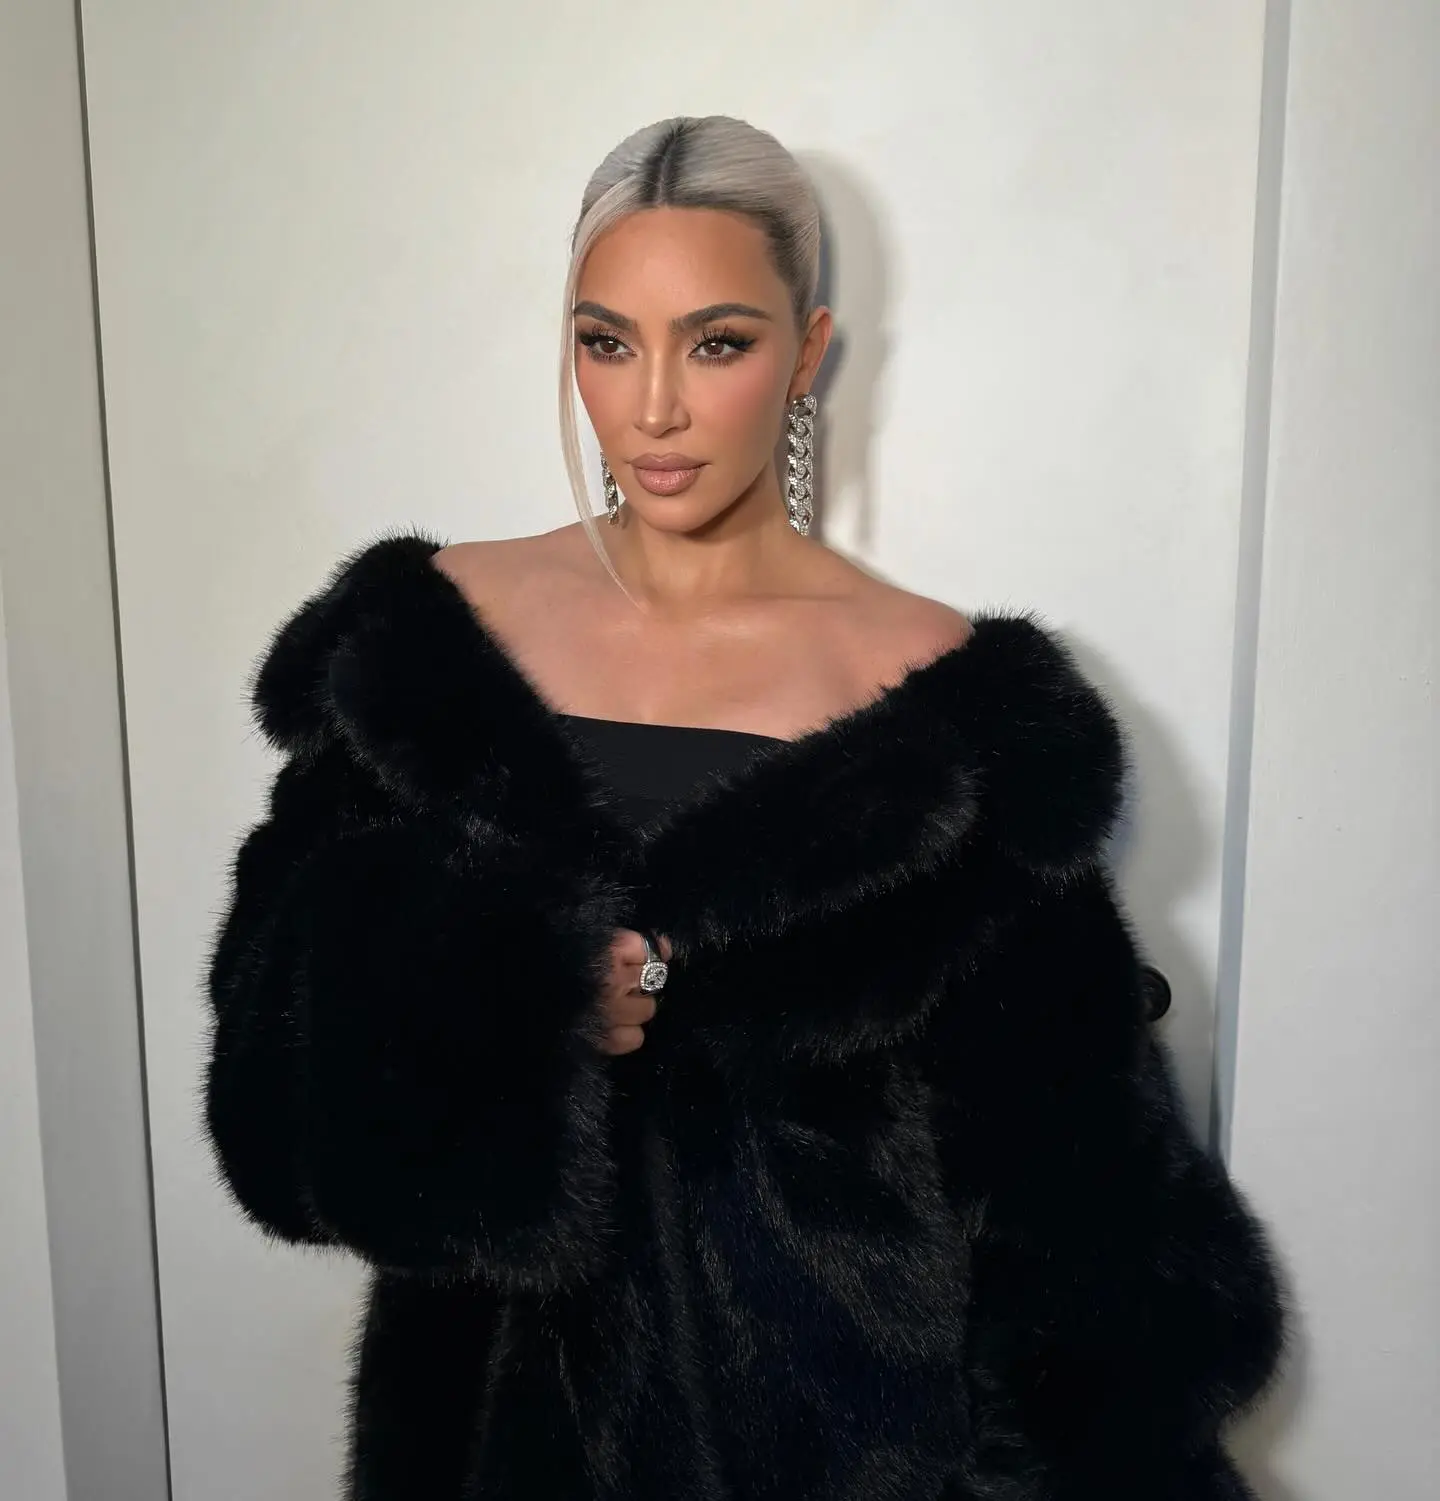 Unflappable Kim: Kardashian's Stoic Roast Performance Sparks Buzz!